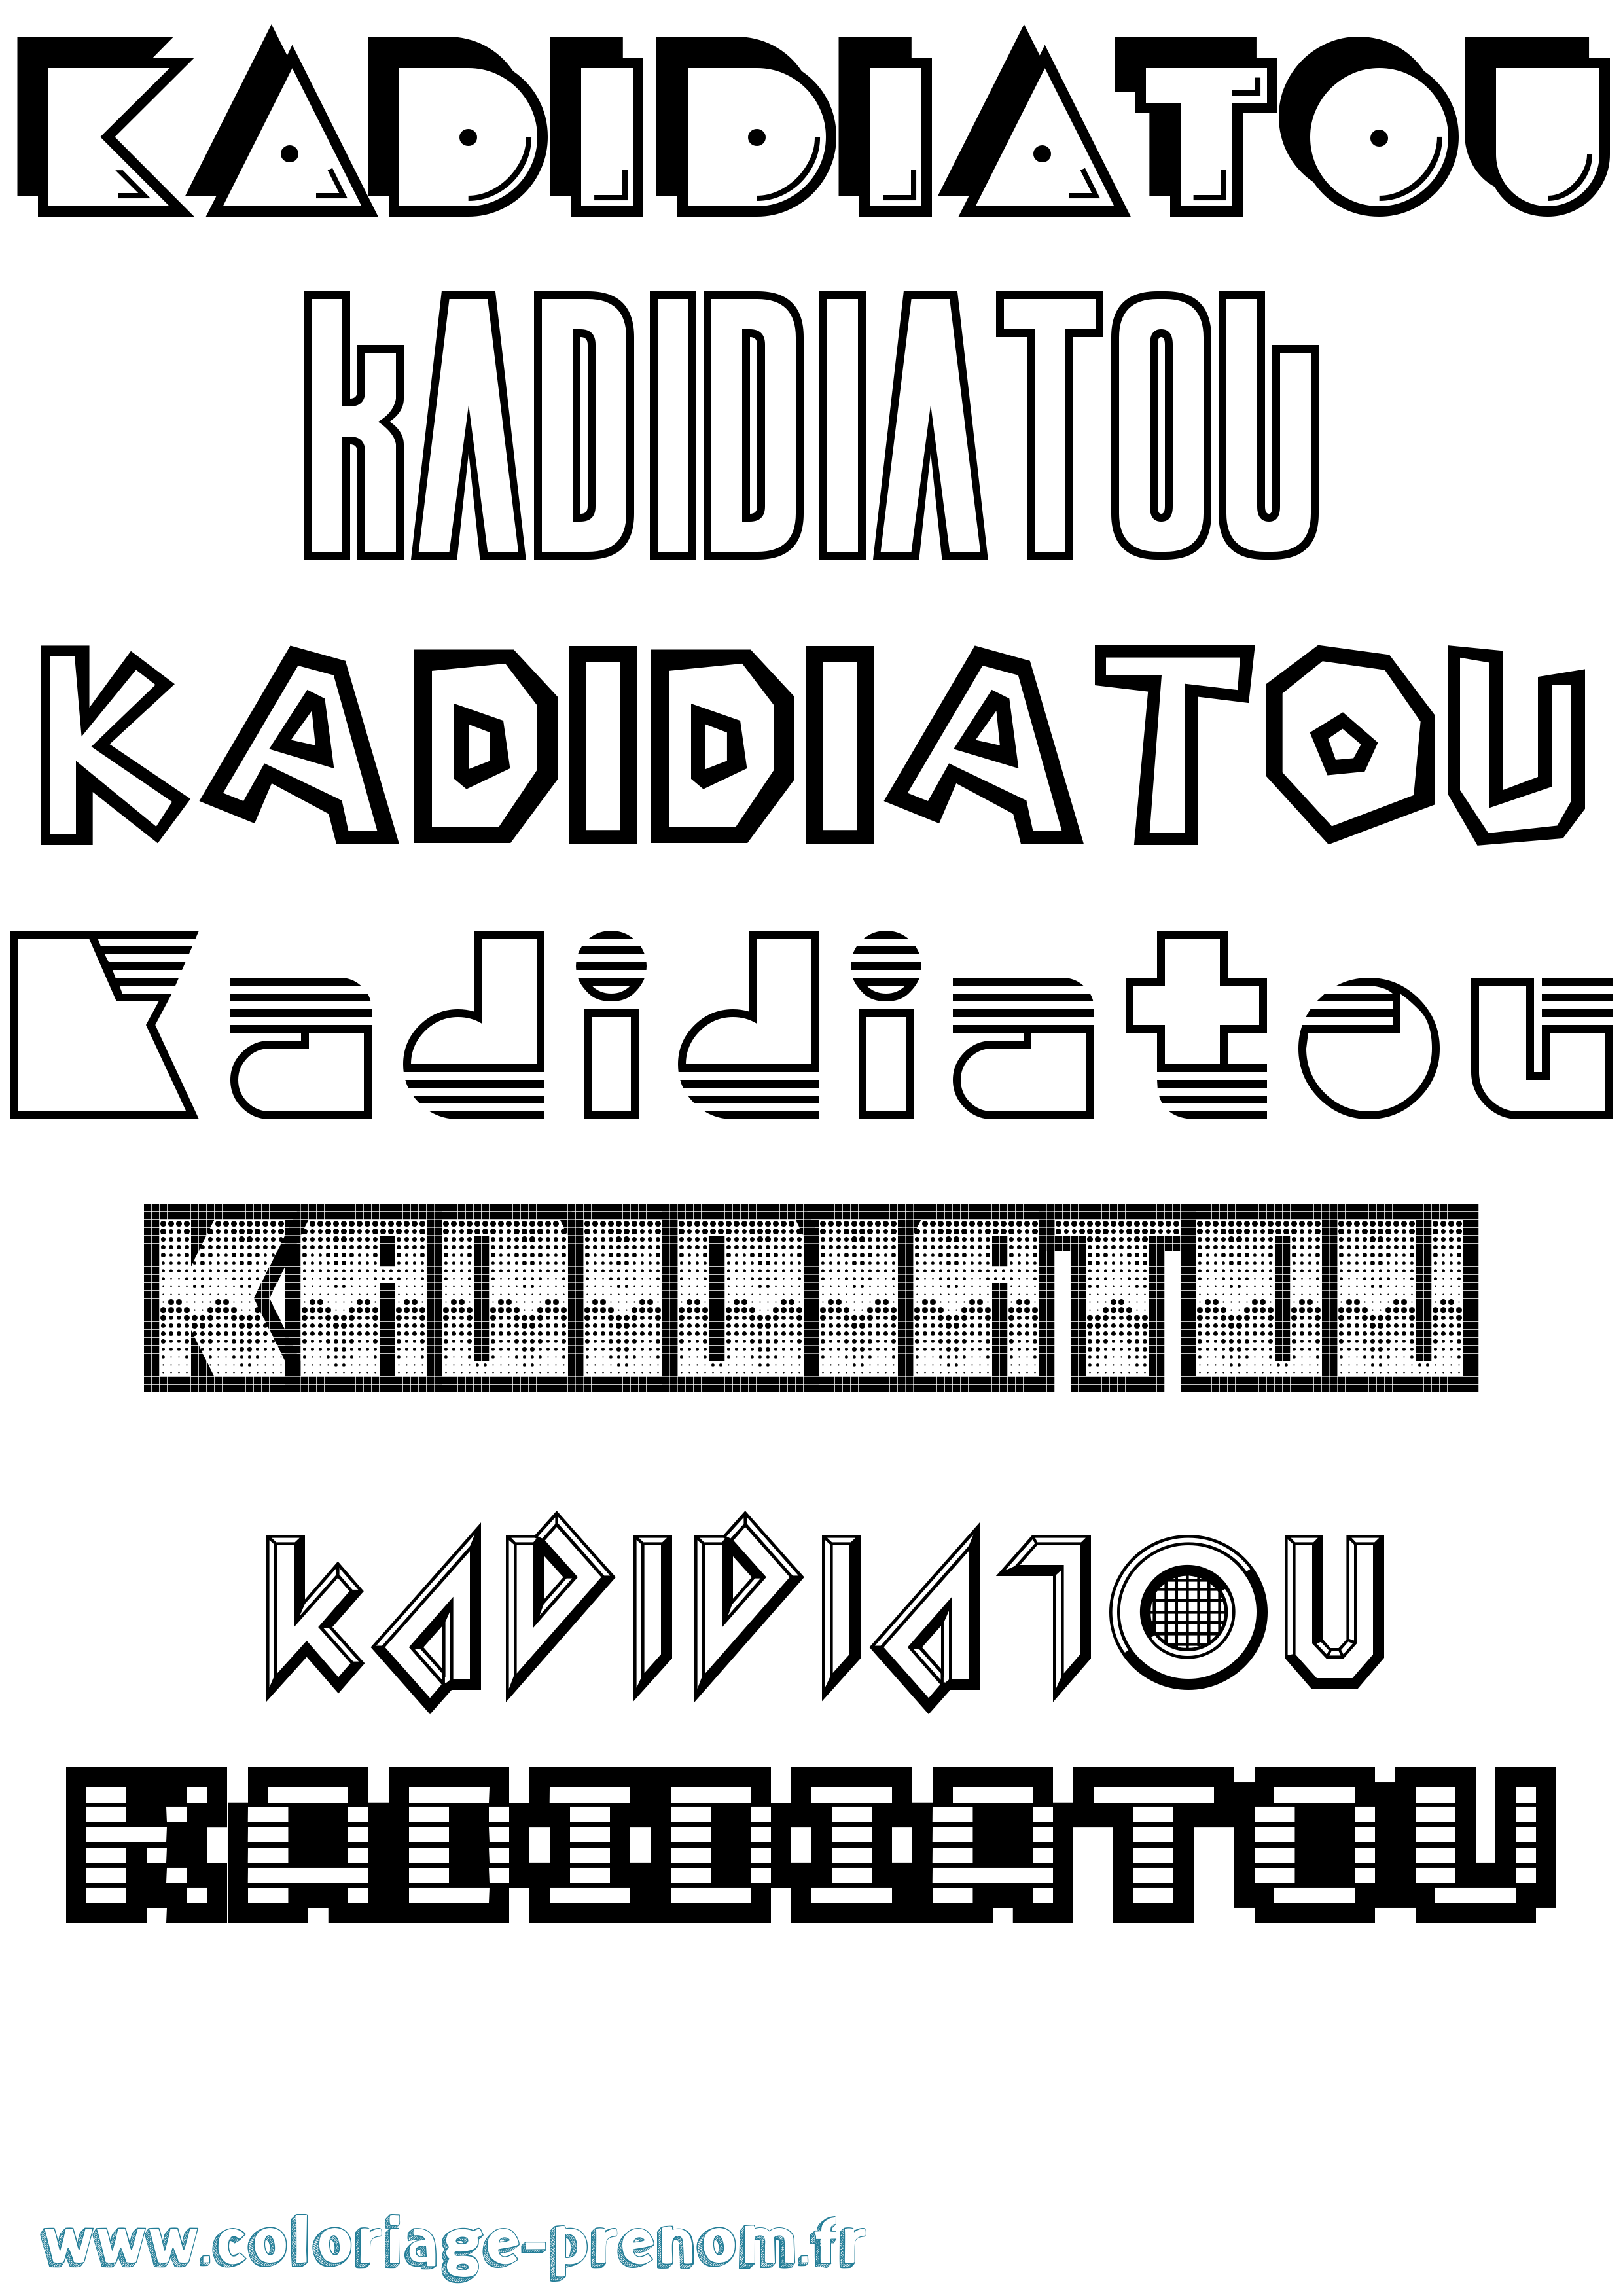 Coloriage prénom Kadidiatou